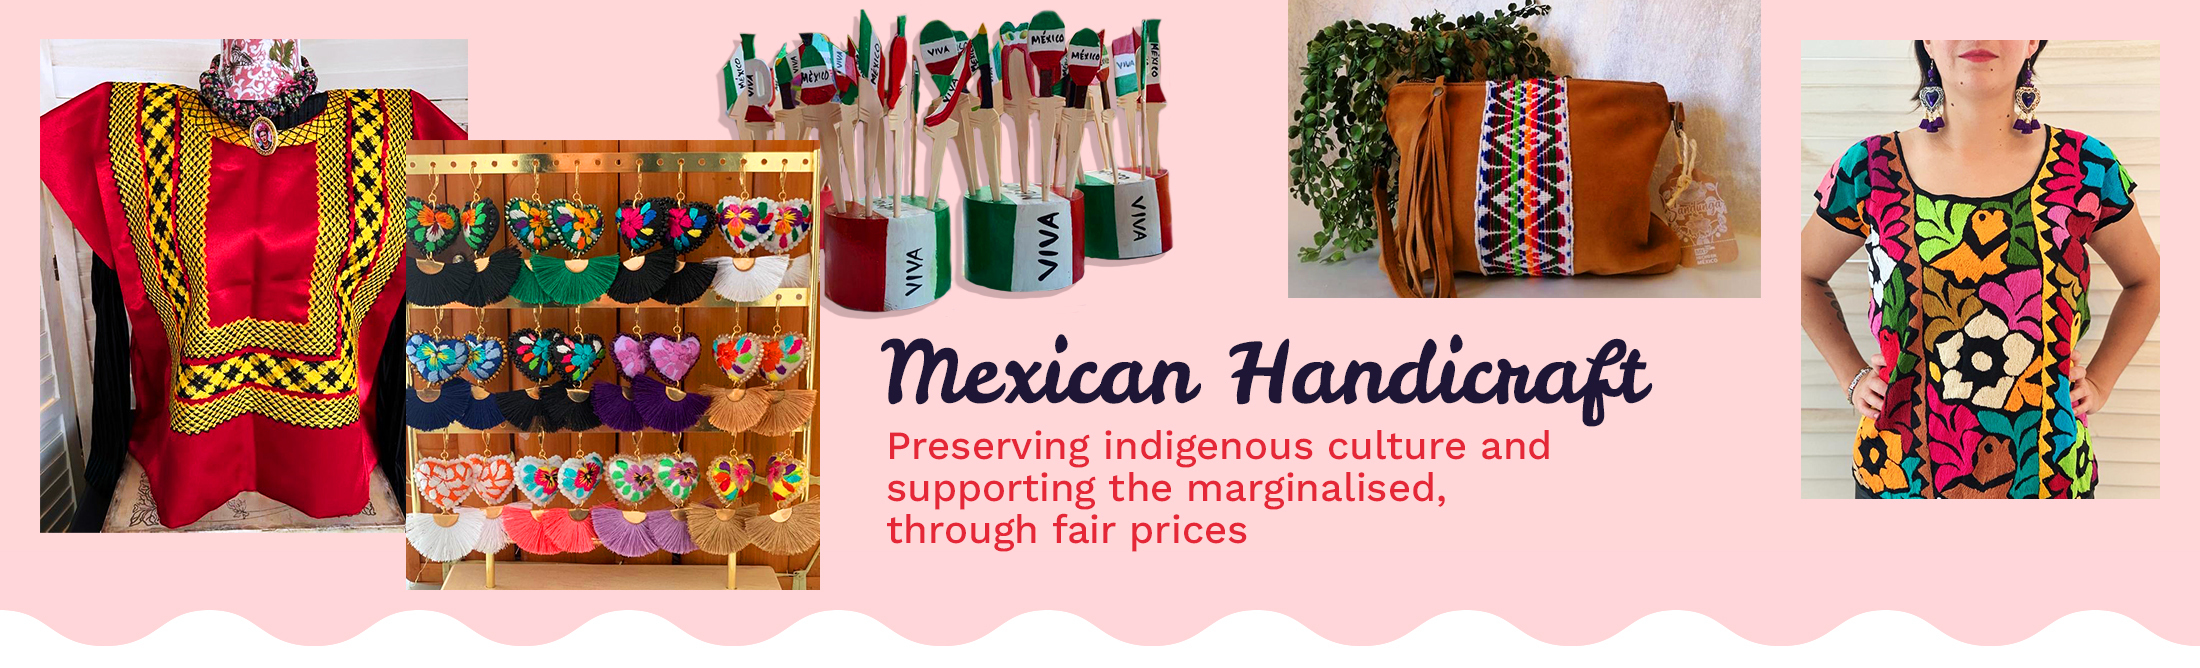 Mexican Handicraft